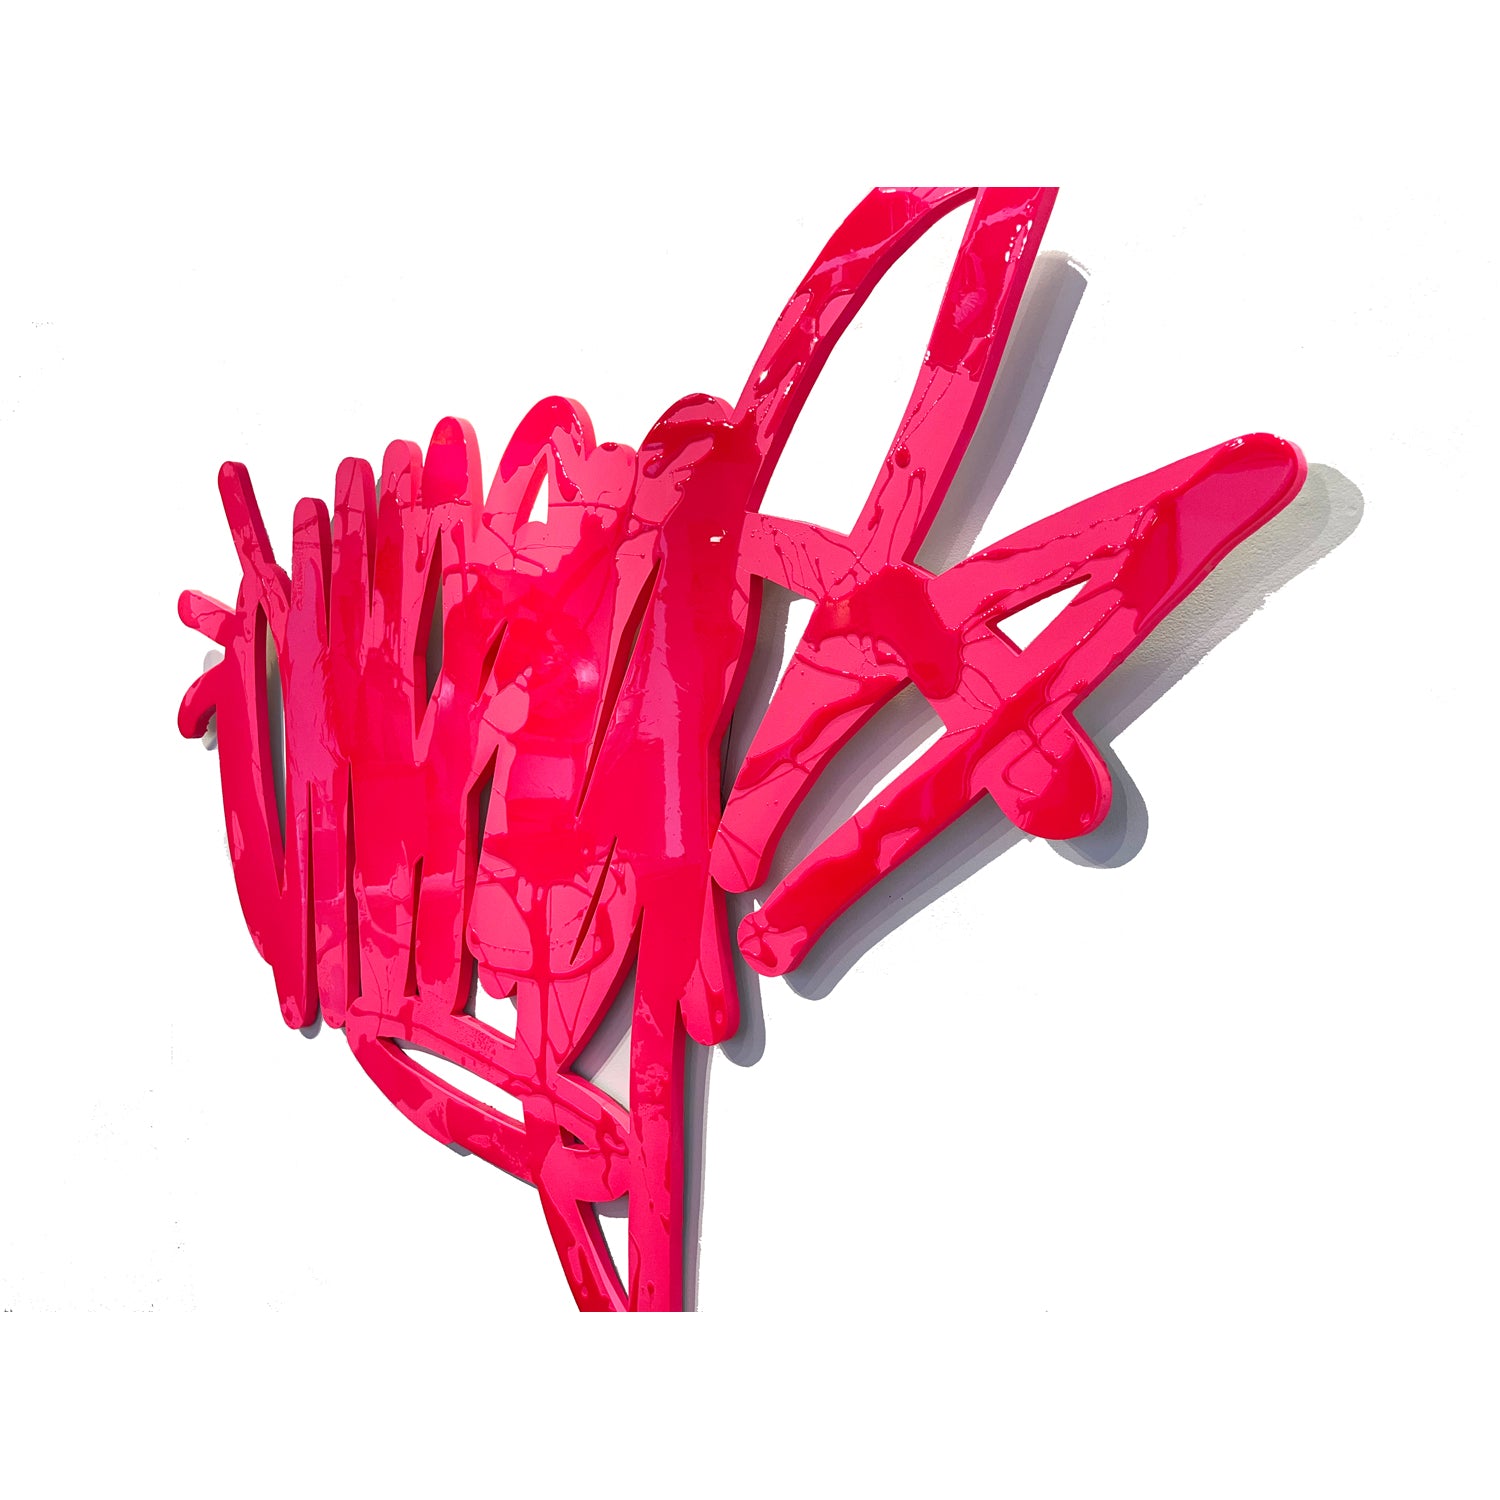 Diogo Snow - 3D Pink Punkstract, 48" x 72"